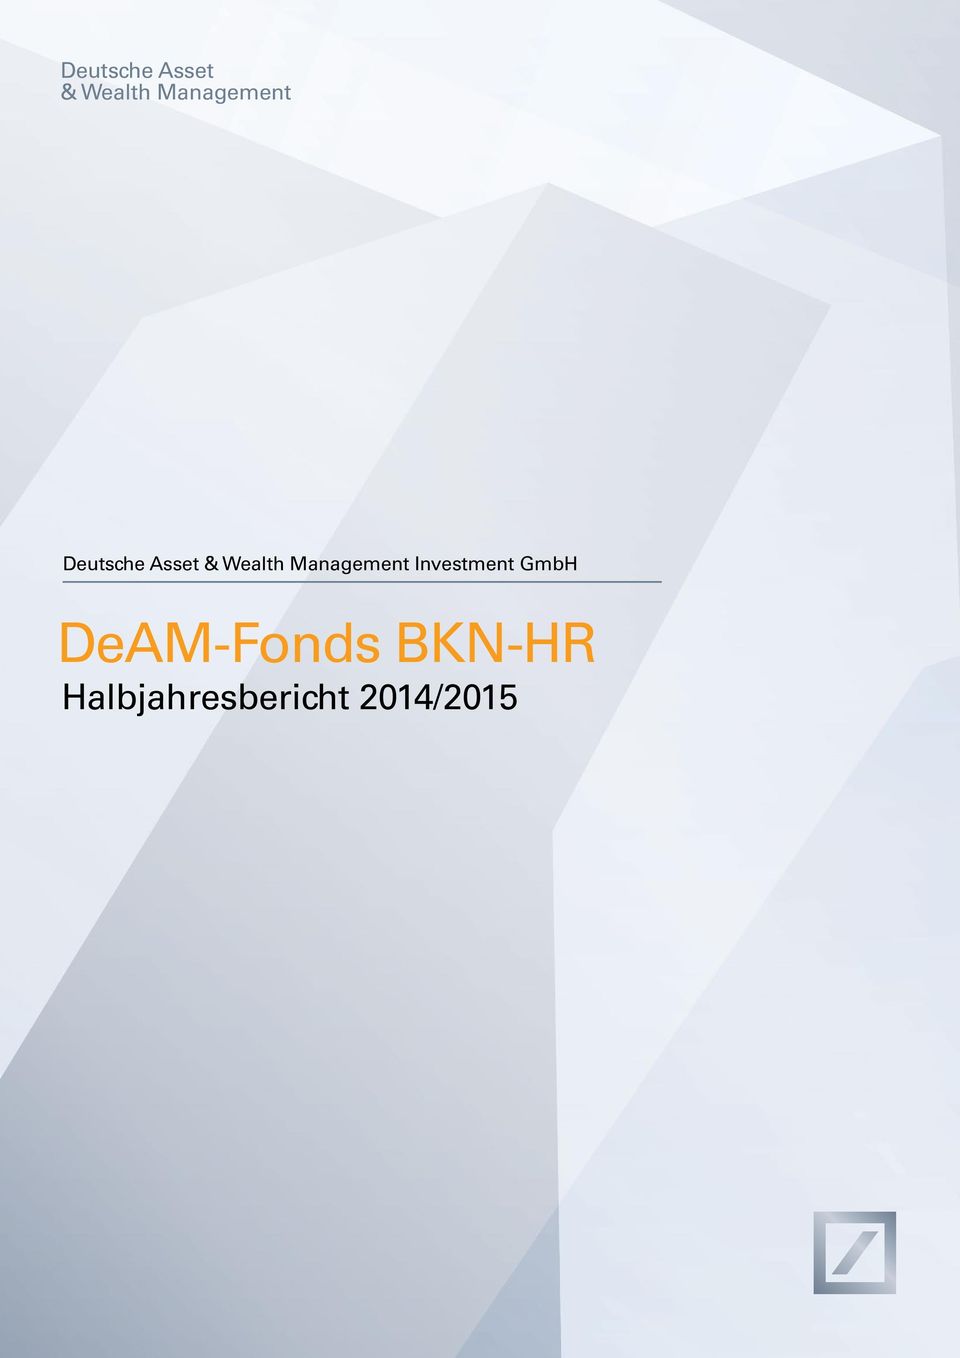 Investment GmbH DeAM-Fonds